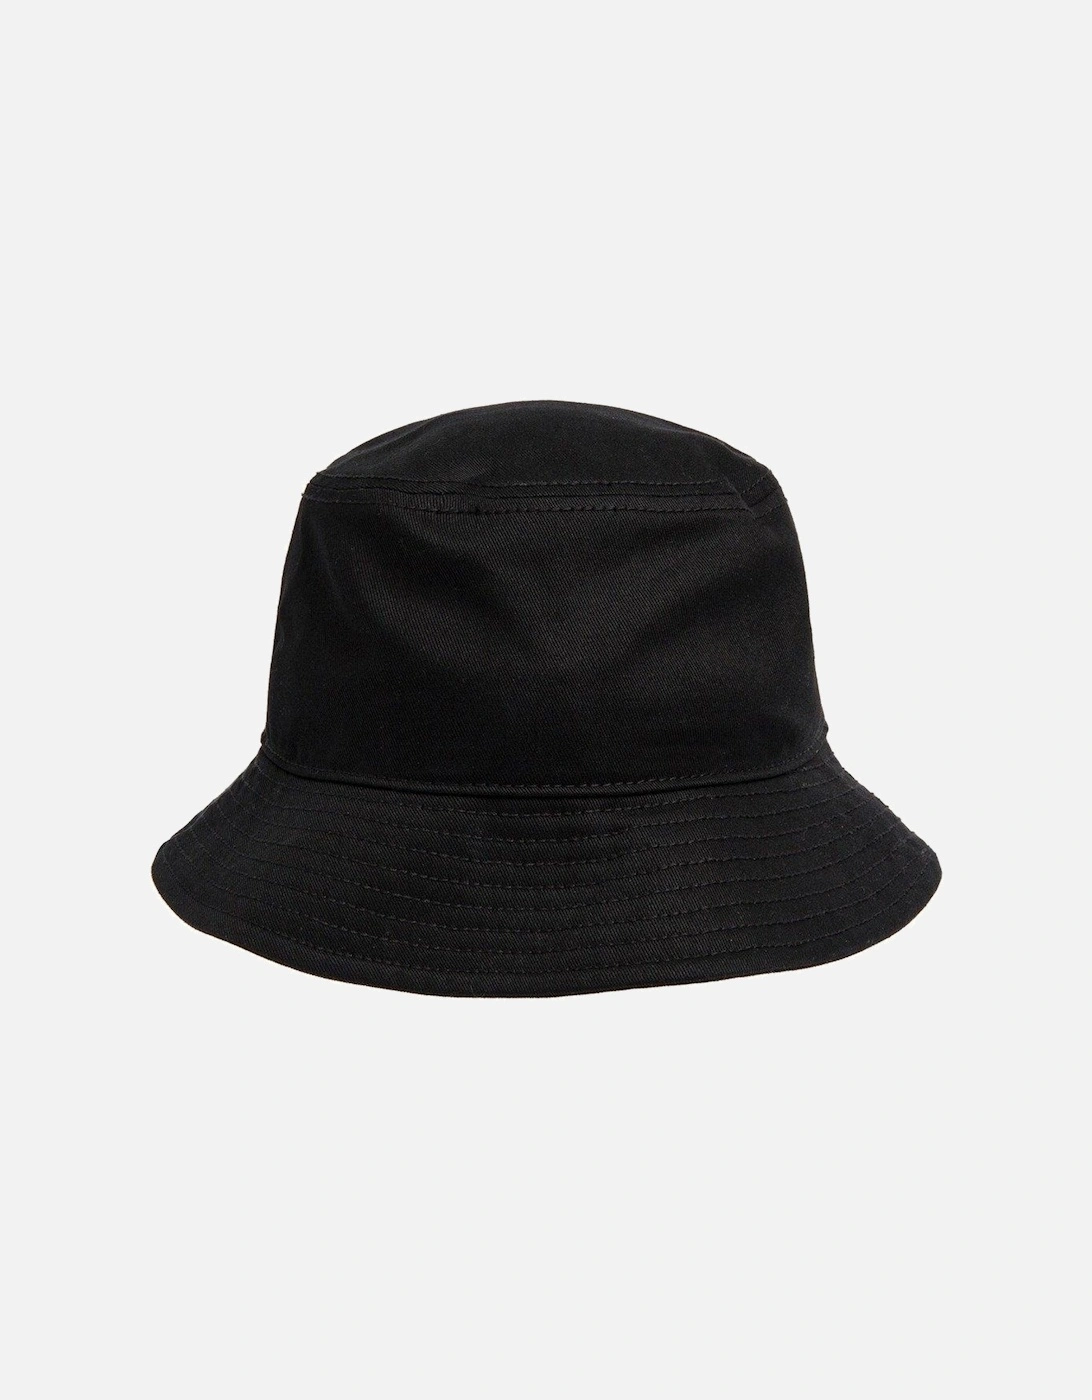 Unisex Adult Bucket Hat